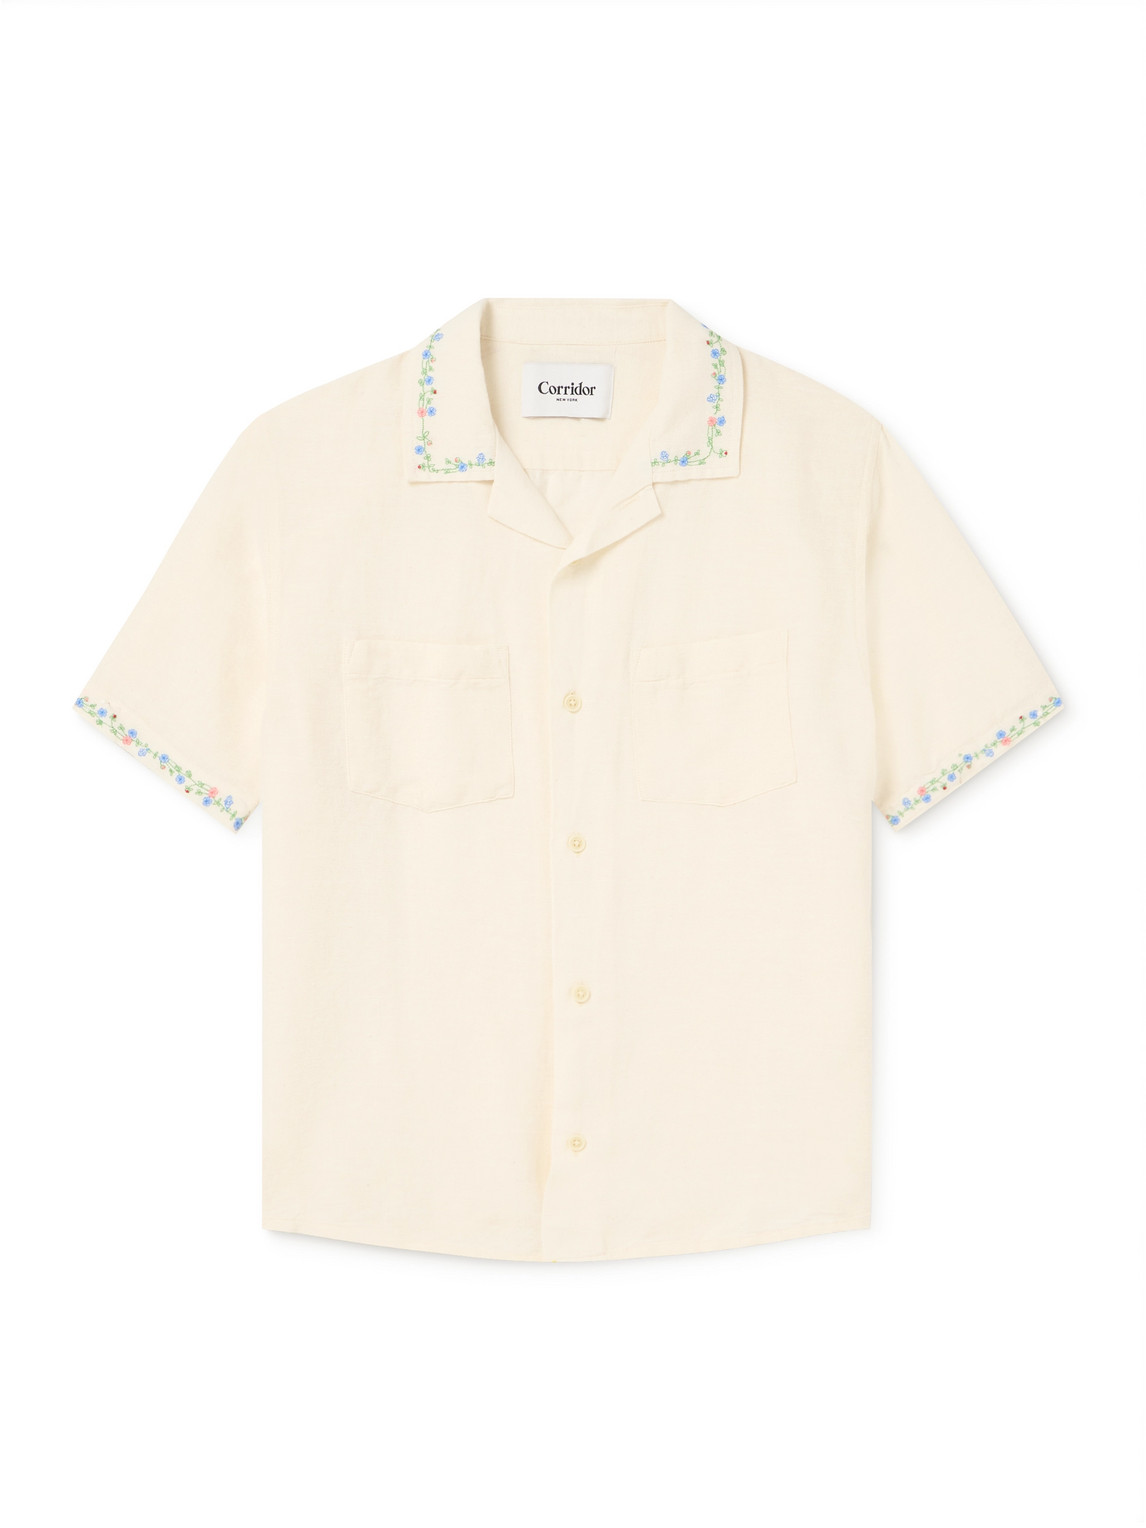 Corridor Hamsa Camp-collar Embroidered Cotton Shirt In White